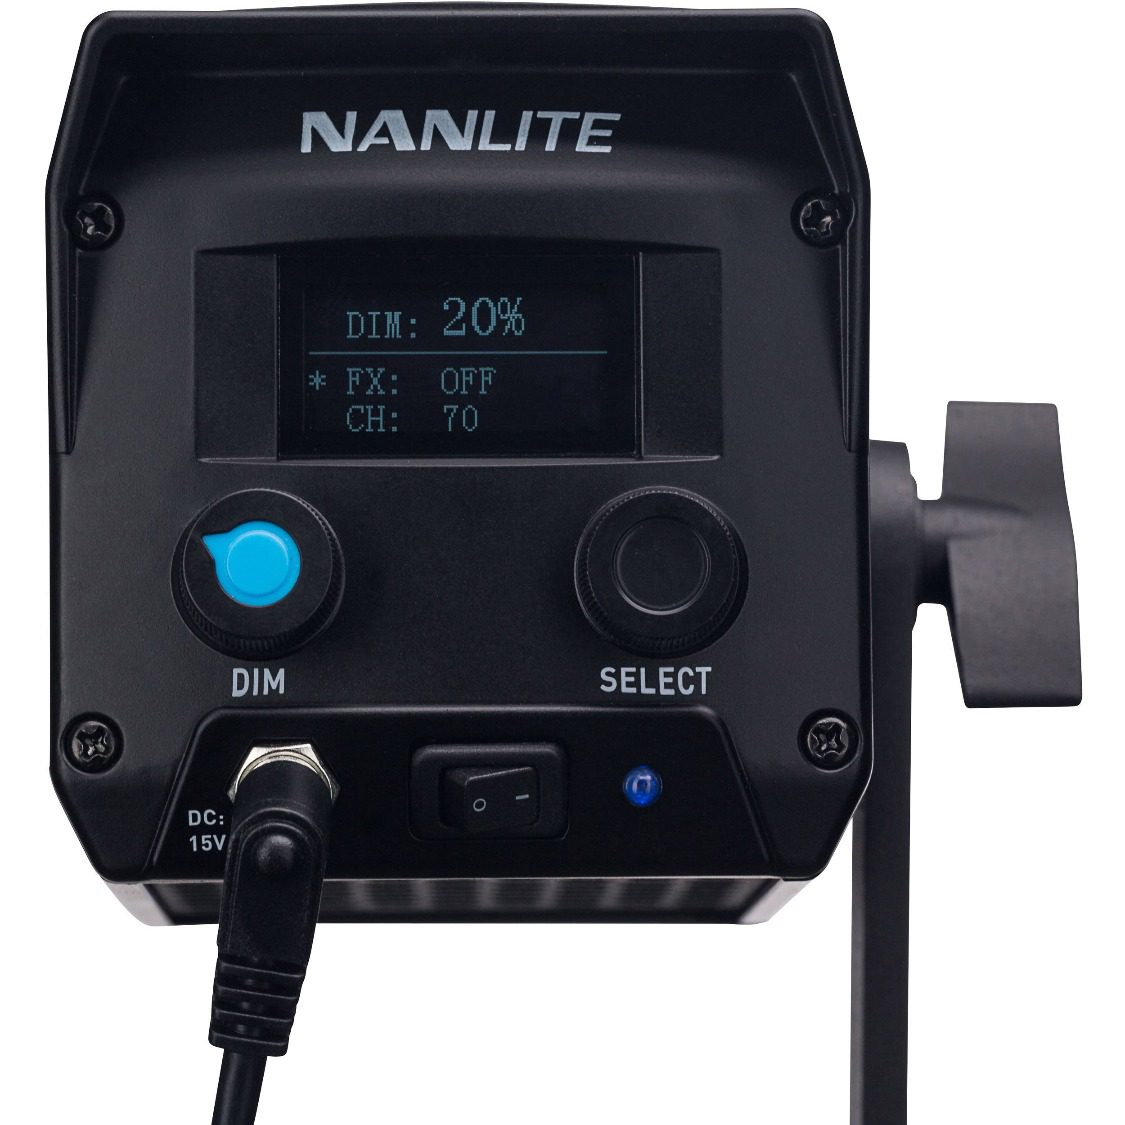 Nanlite Forza 60